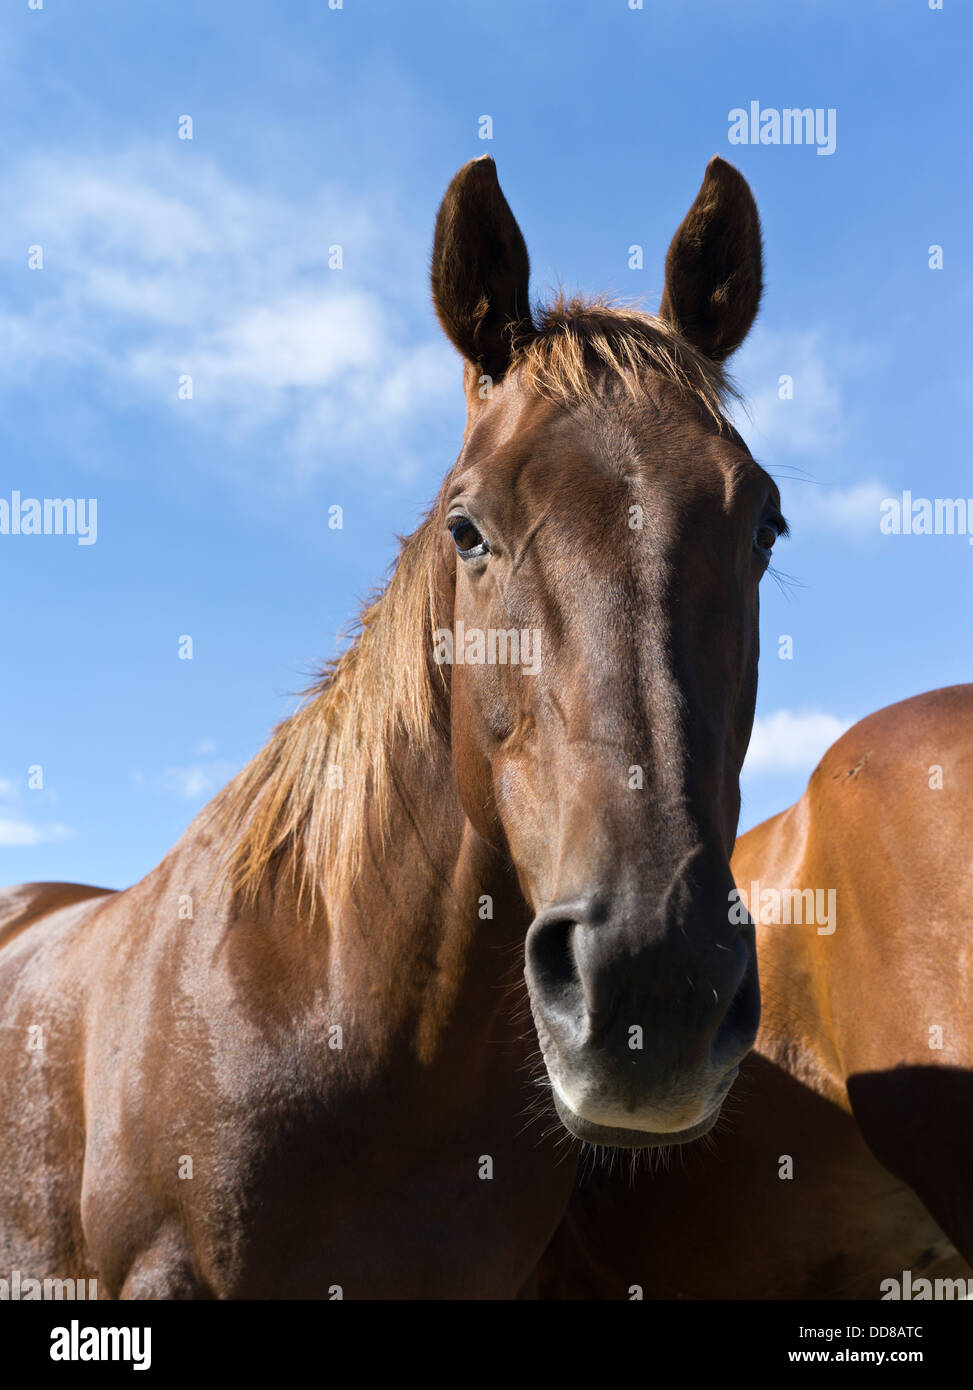 dh HORSE NZ Nahaufnahme der Pferde Kopf angehoben Porträt Stockfoto